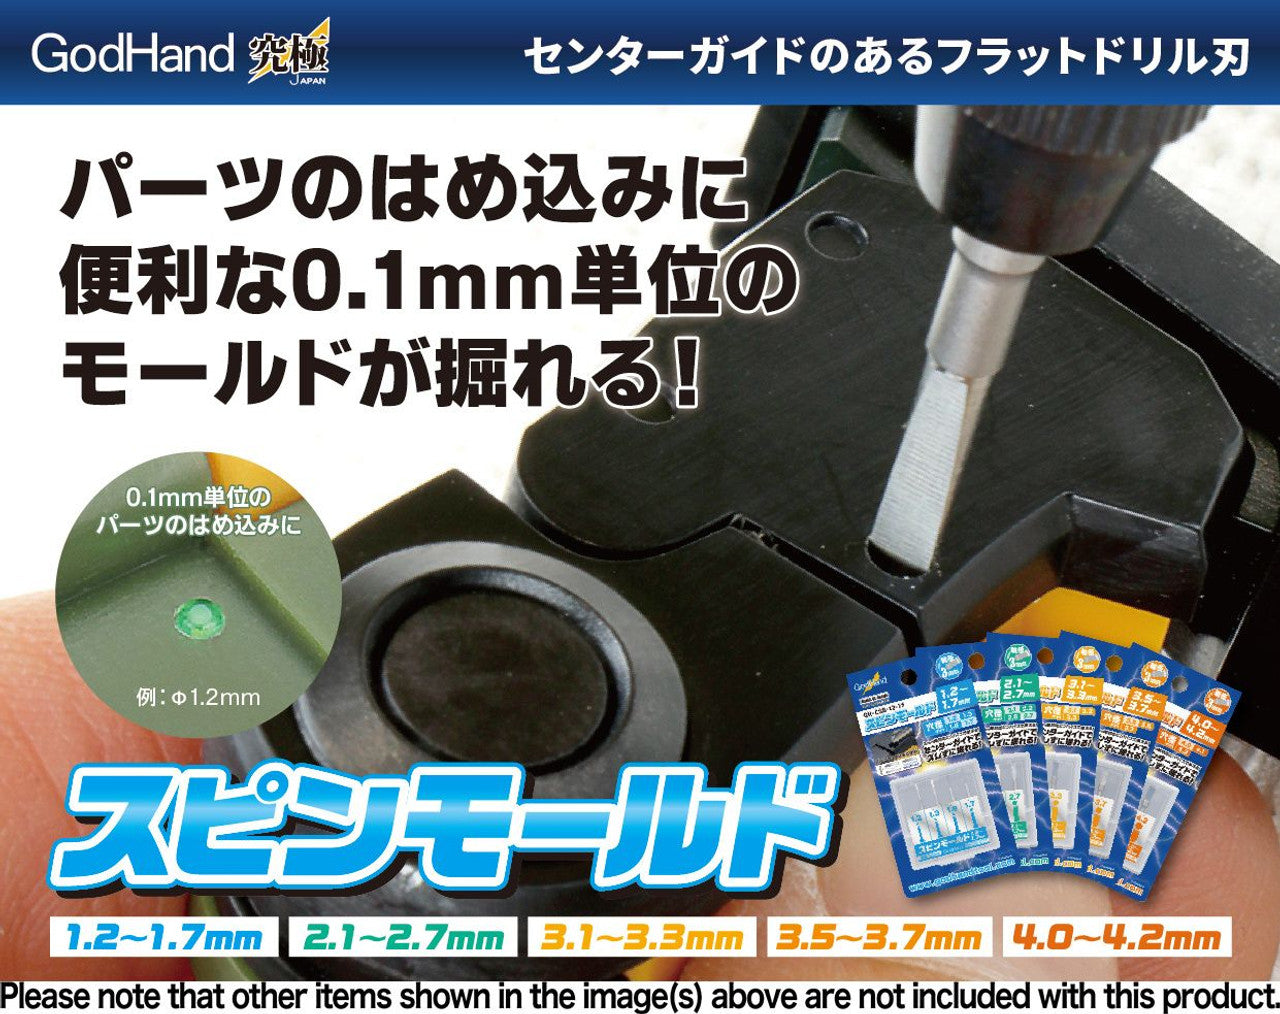 God Hand GH-CSB-31-33 Spin Mold 3.1 - 3.3mm - BanzaiHobby